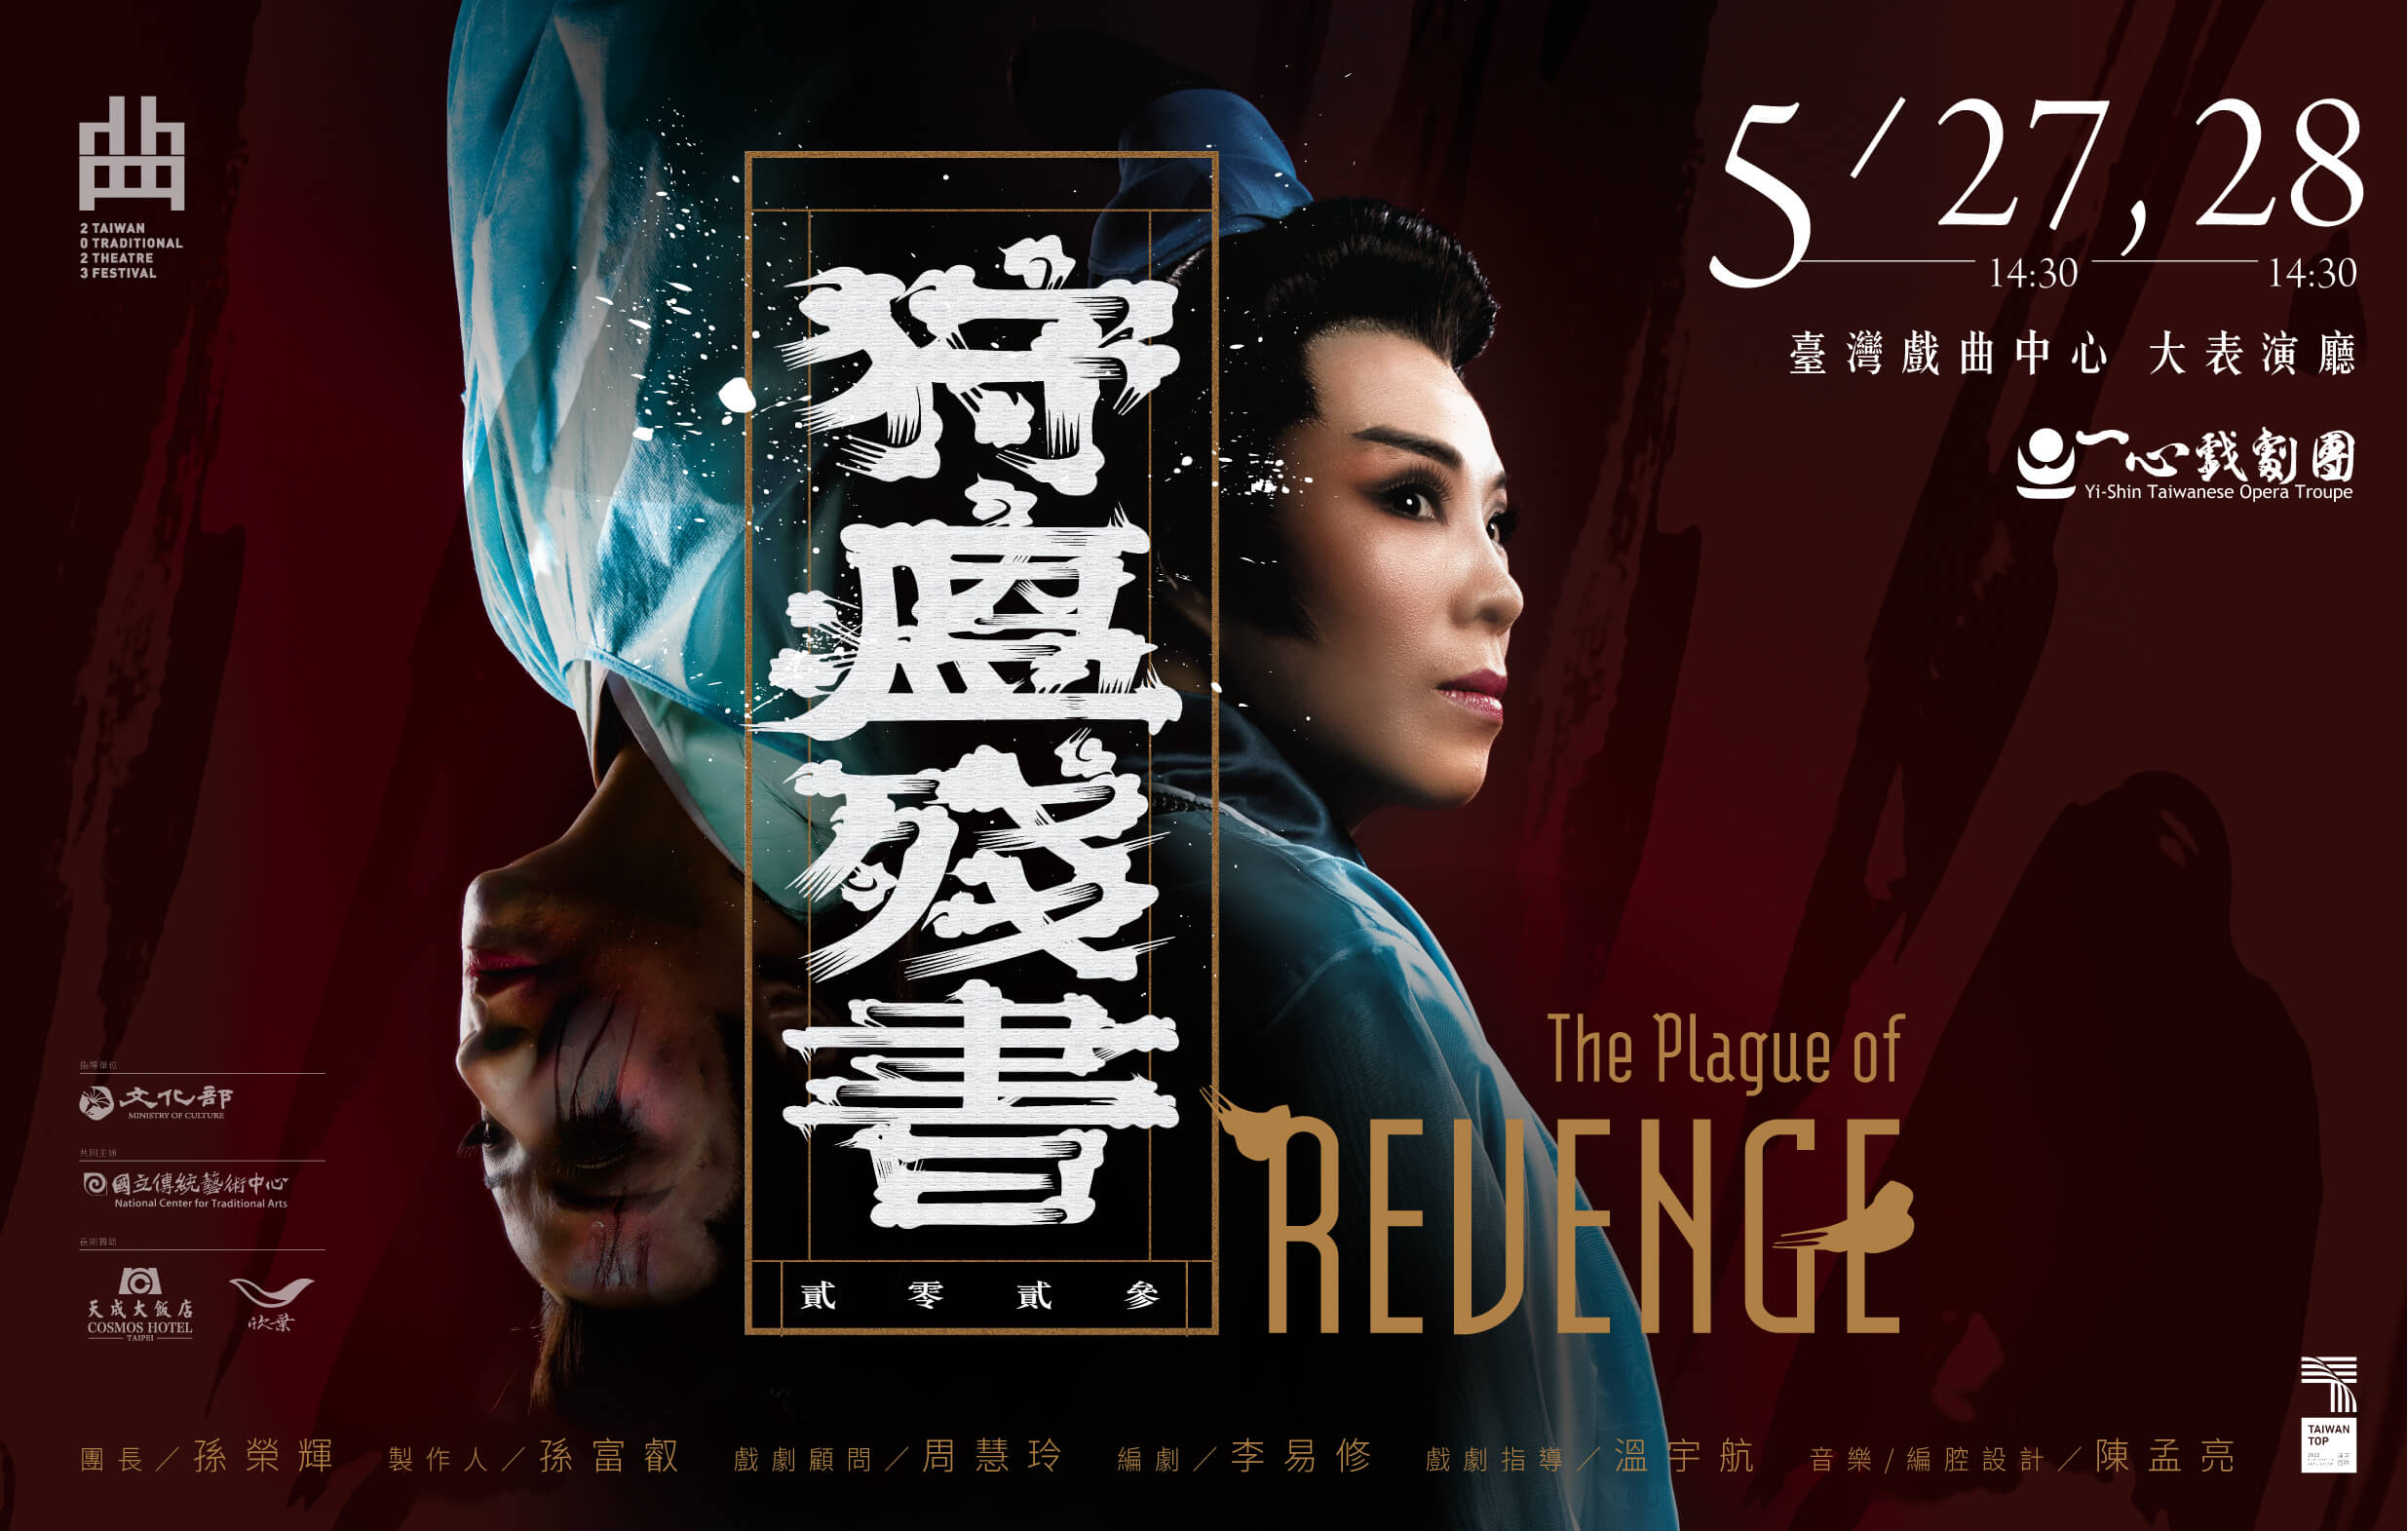 Yi-Shin Taiwanese Opera Troupe - The Plague of Revenge｜節目總覽｜臺灣戲曲中心官網